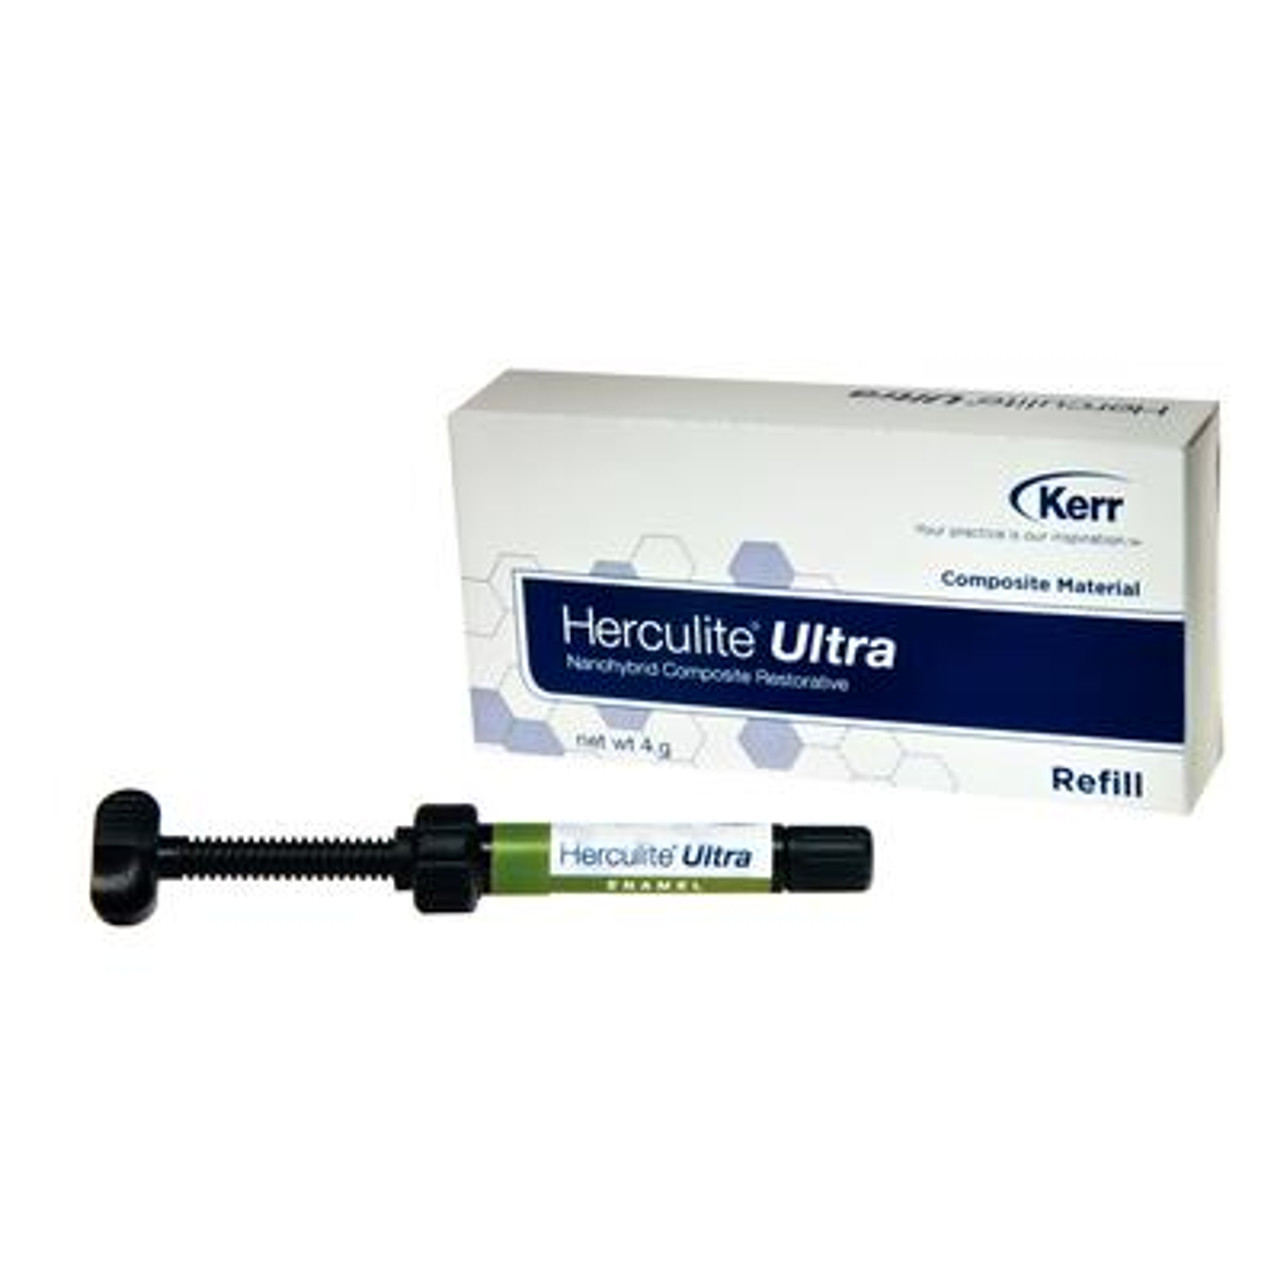 Kerr Herculite Ultra Refill B3 Enamel Syringe ea